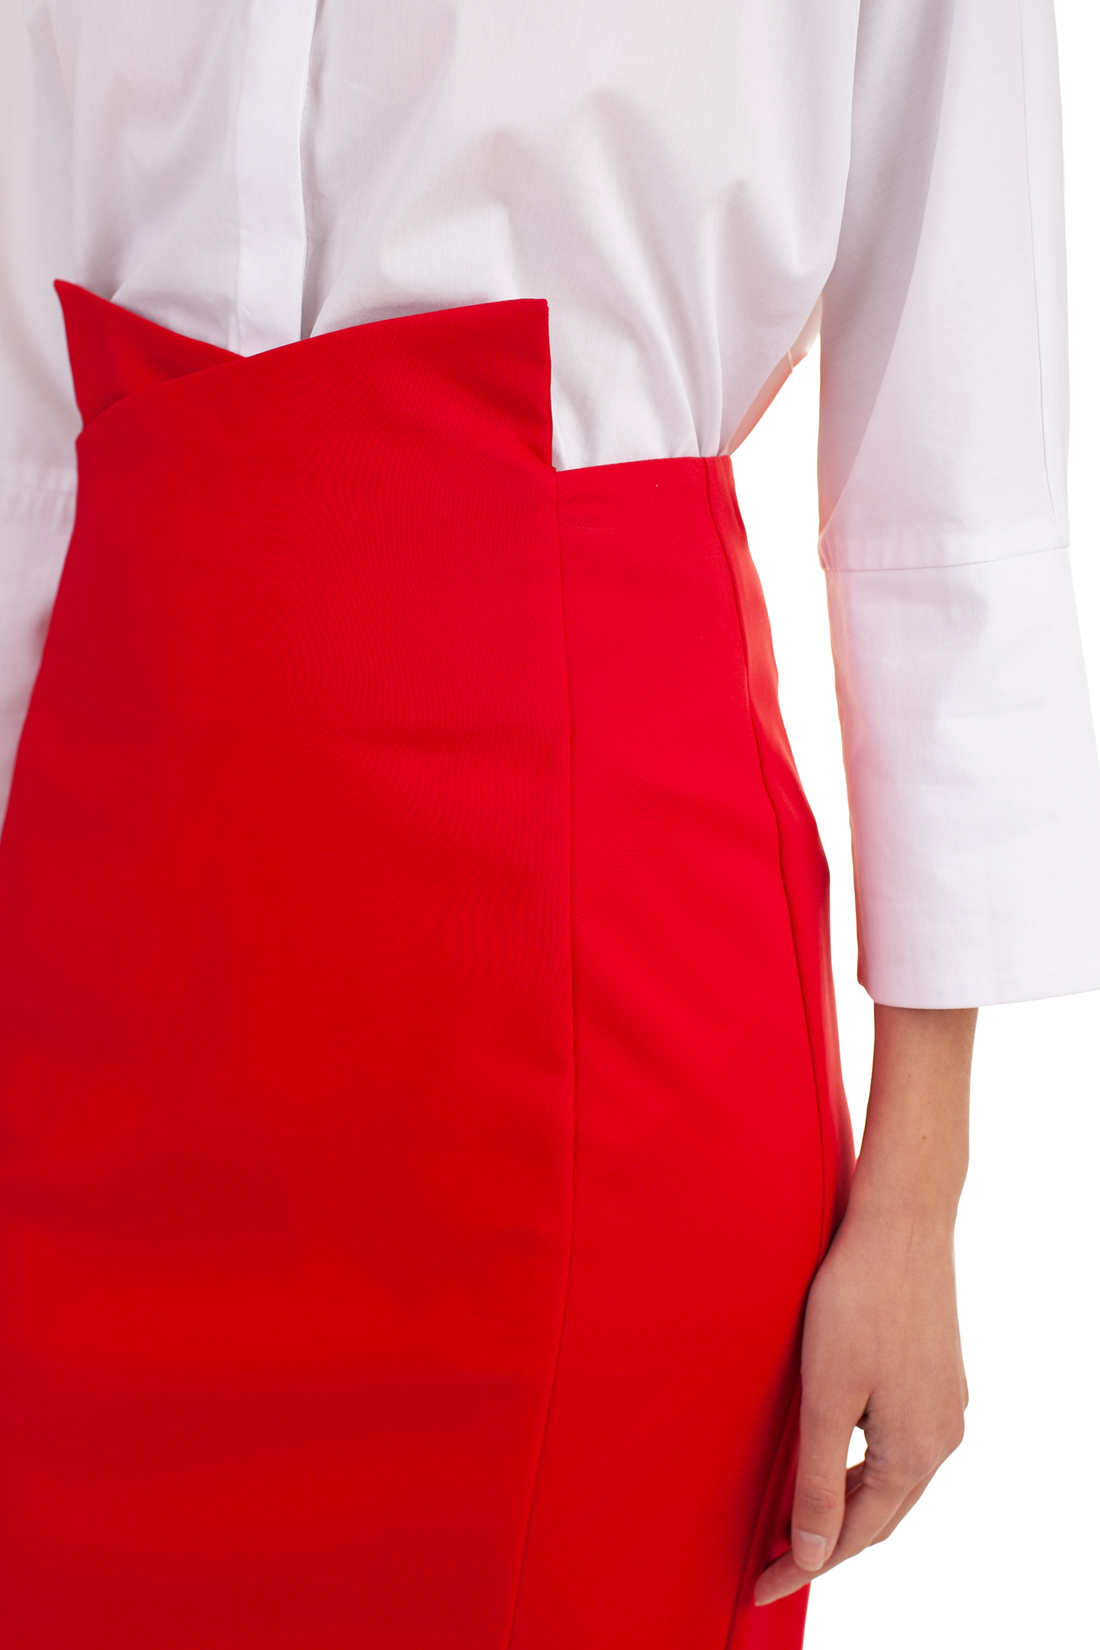 Красная юбка-миди (арт. baon B478038), размер XL, цвет красный Красная юбка-миди (арт. baon B478038) - фото 3